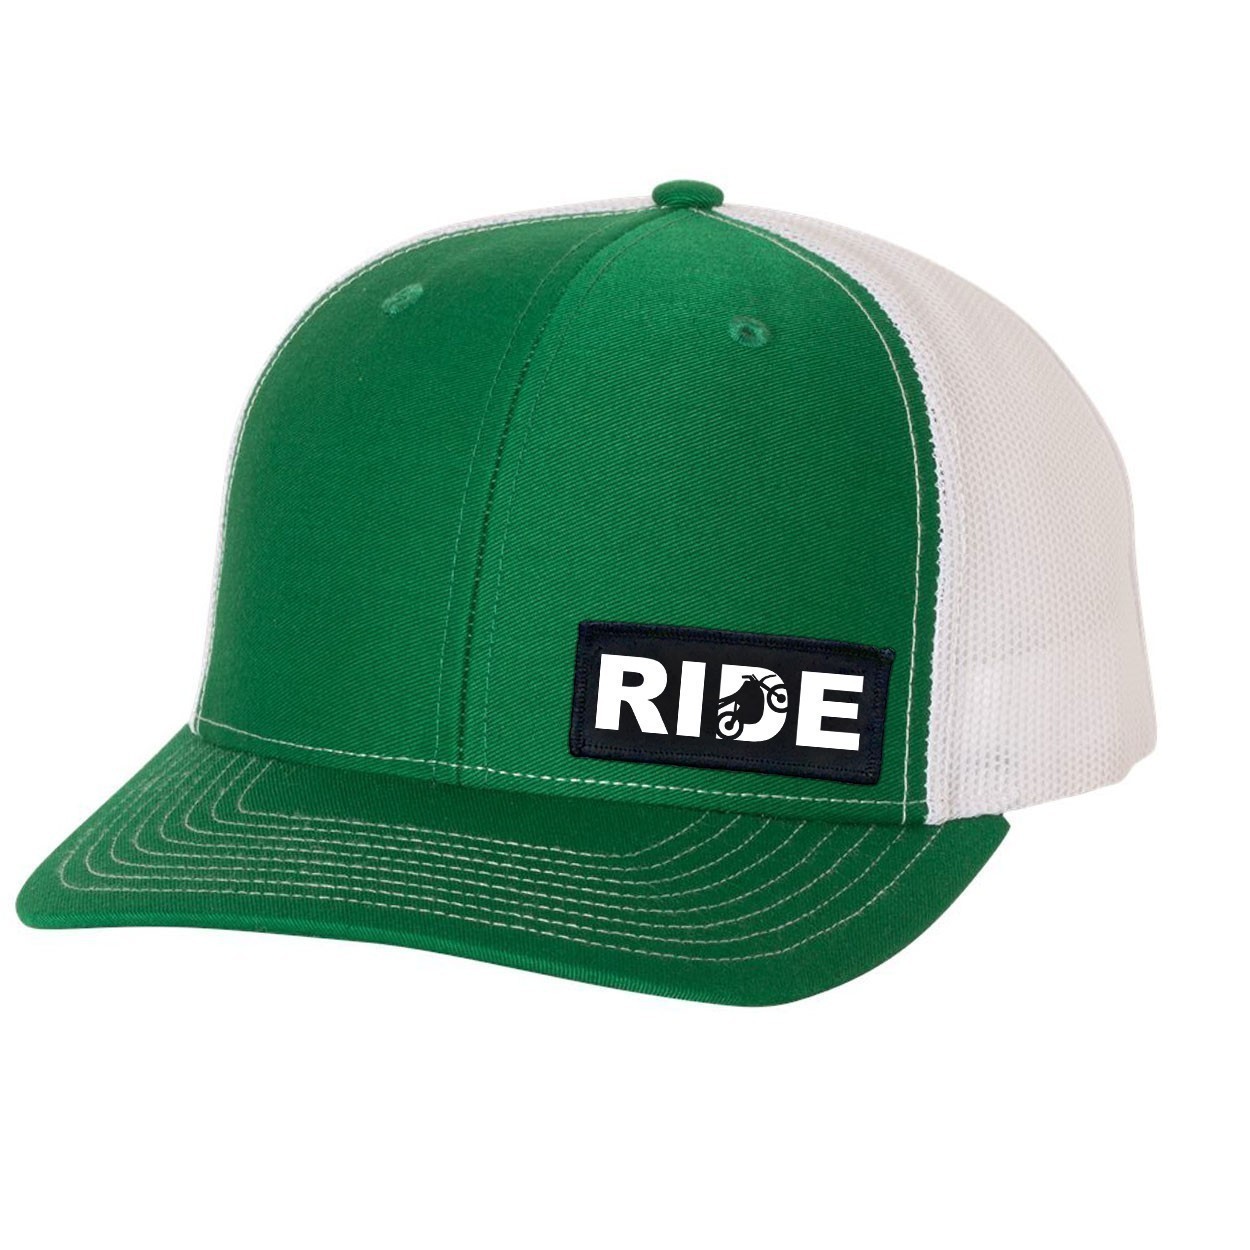 Ride Moto Logo Night Out Woven Patch Snapback Trucker Hat Green/White (White Logo)